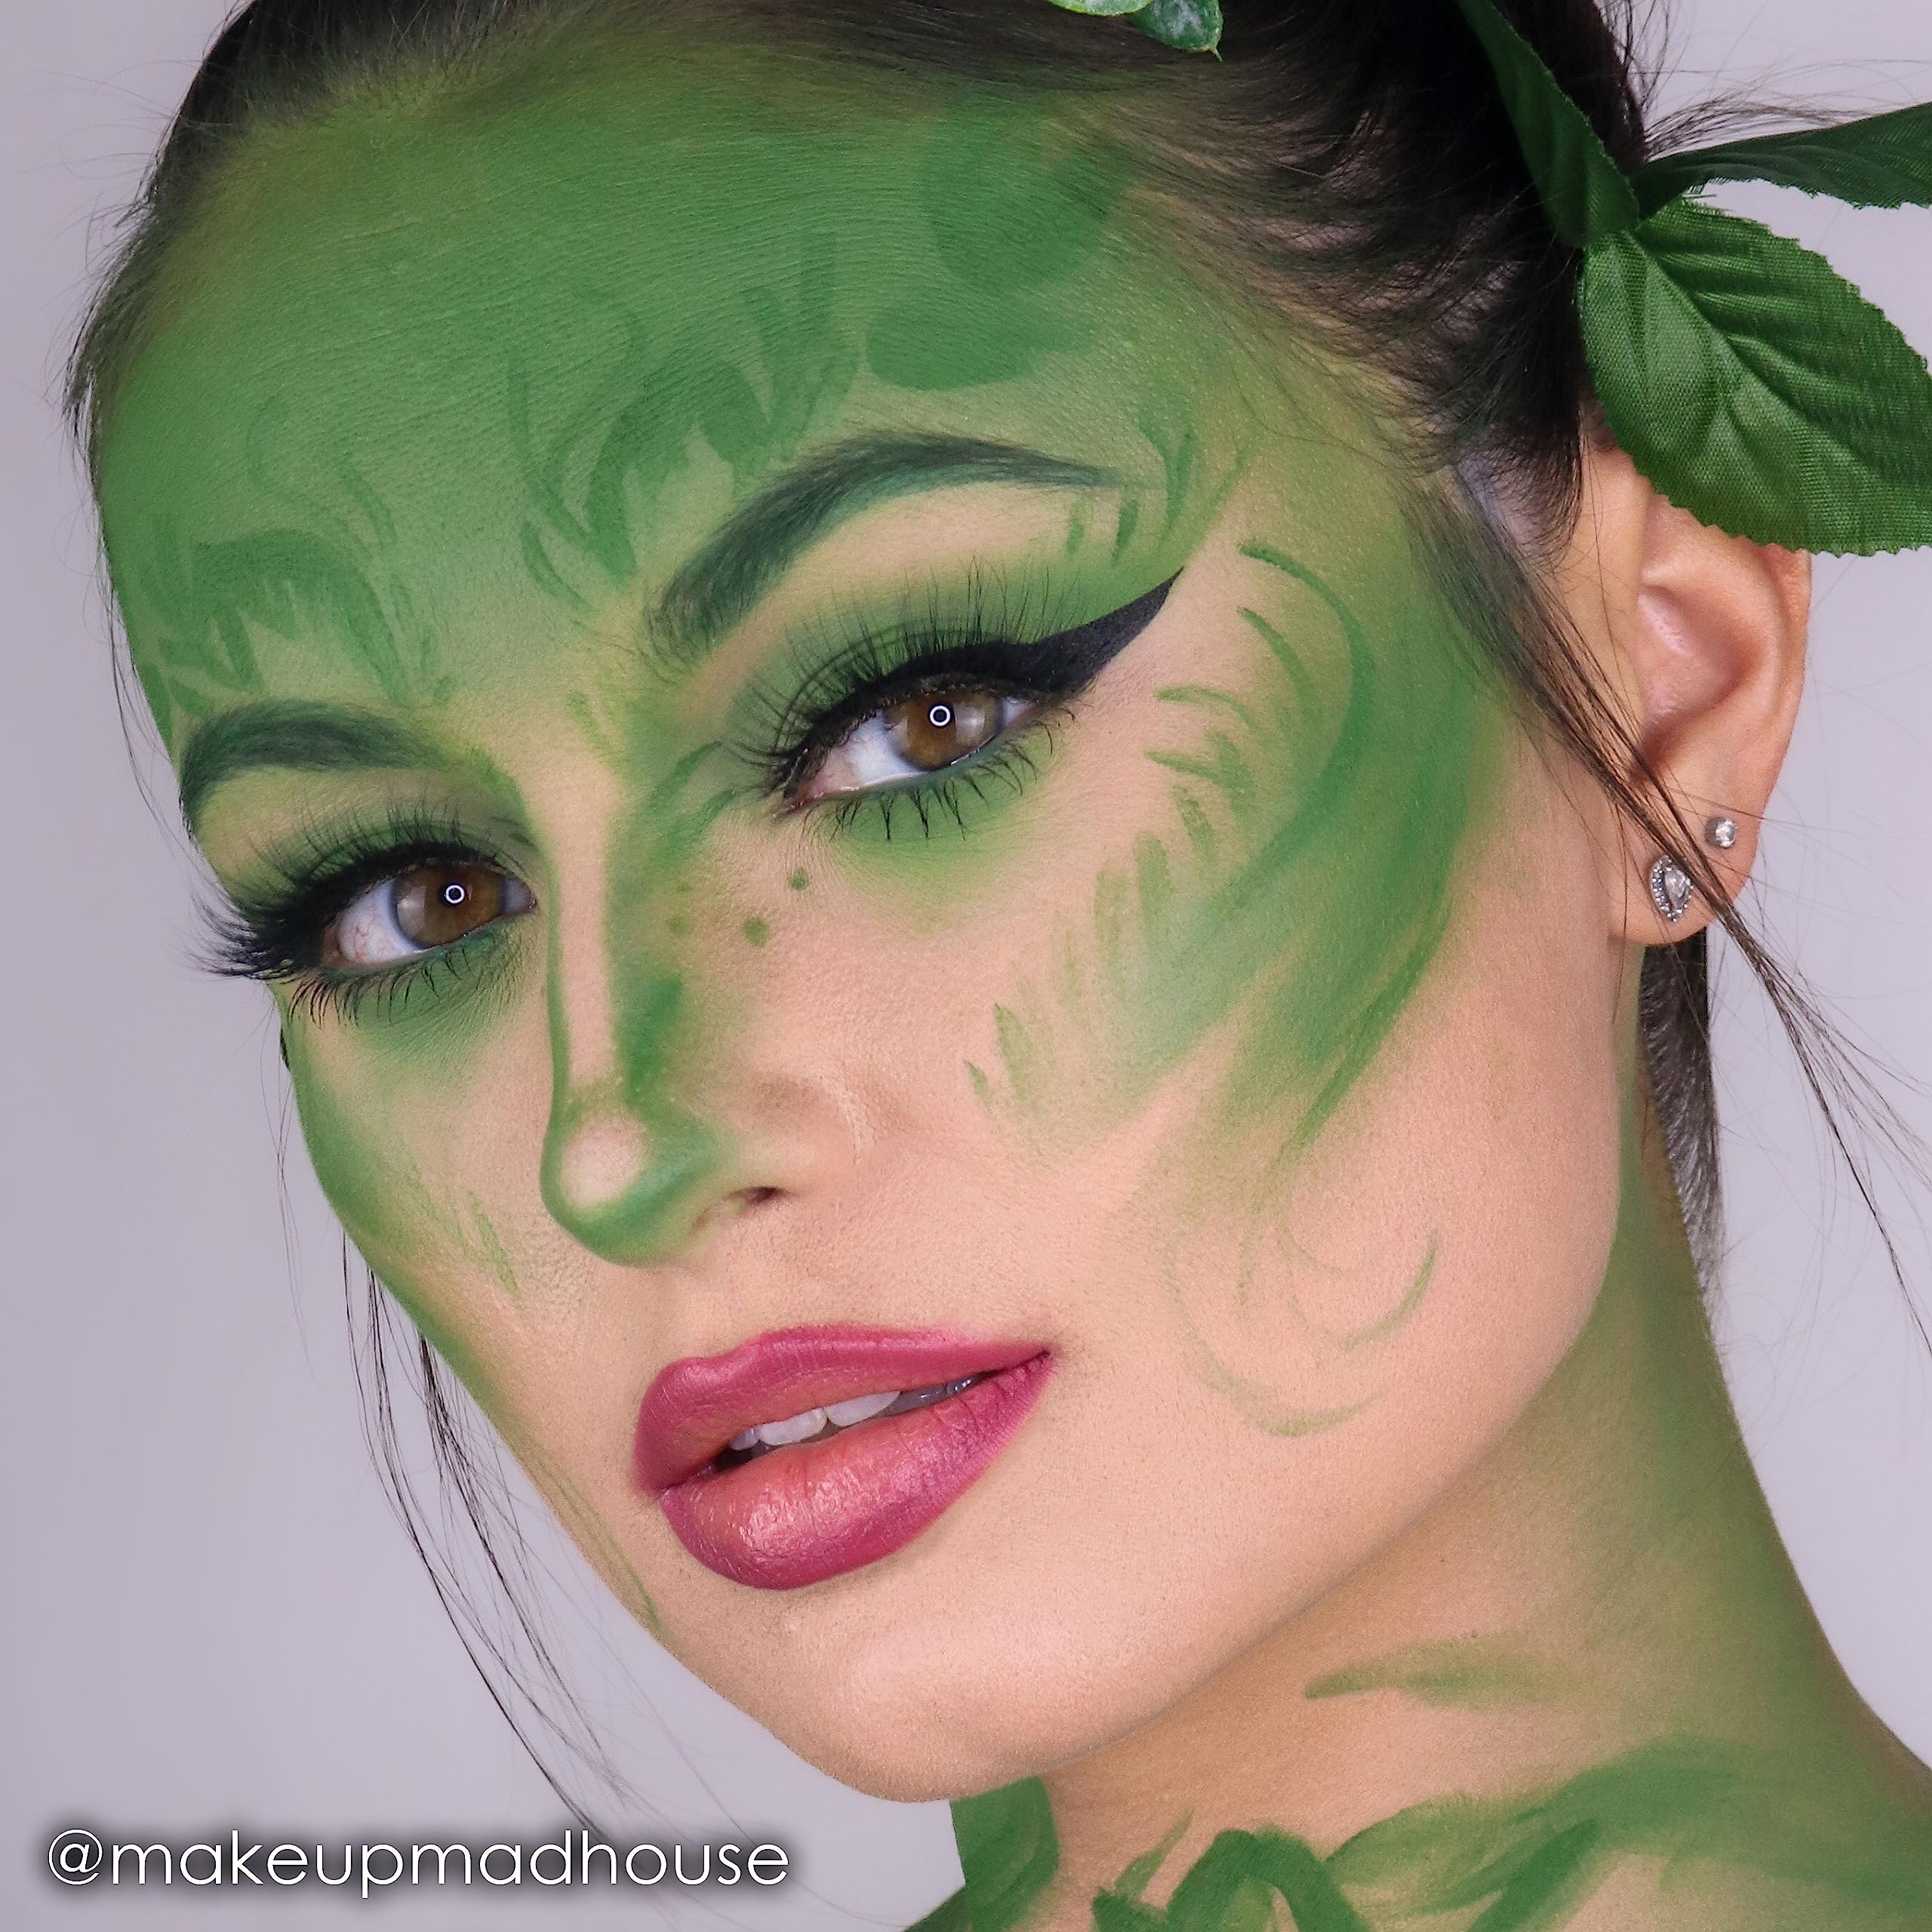 Mehron Makeup StarBlend Cake Makeup | Wet/Dry Pressed Powder Face Makeup | Powder Foundation | Green Face Paint & Body Paint 2 oz (56g)